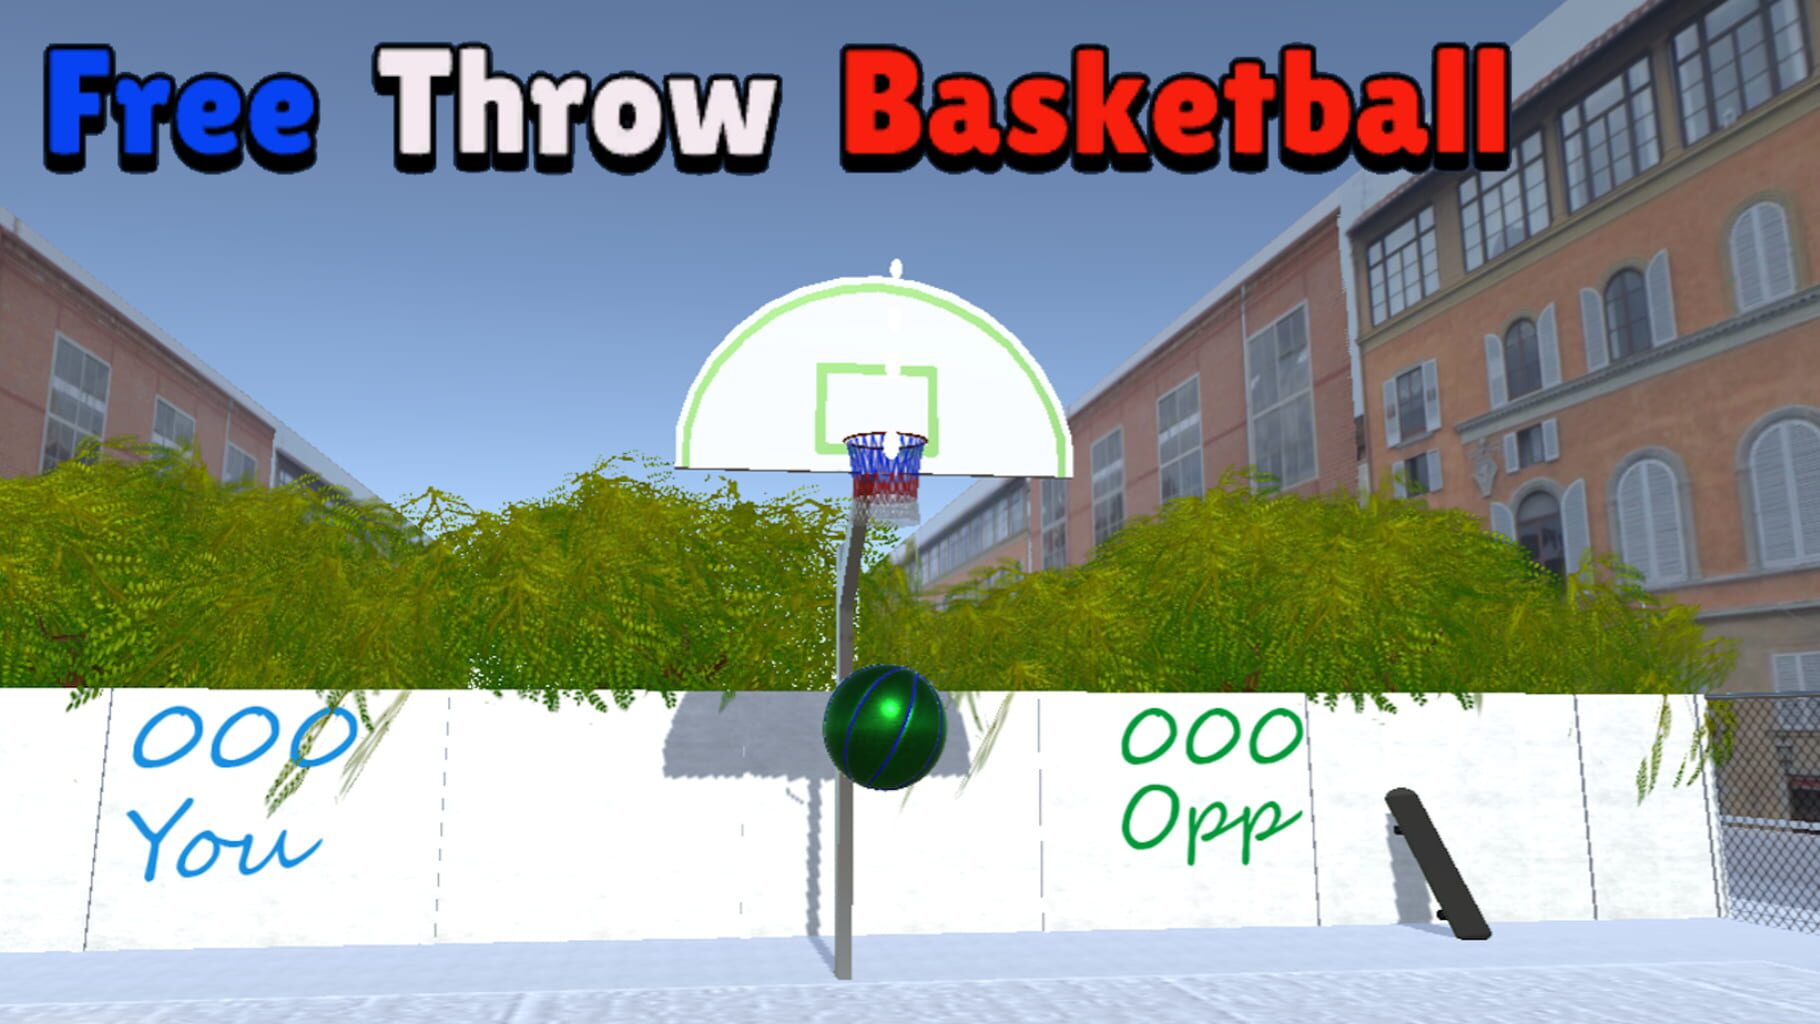 Free Throw Basketball artwork